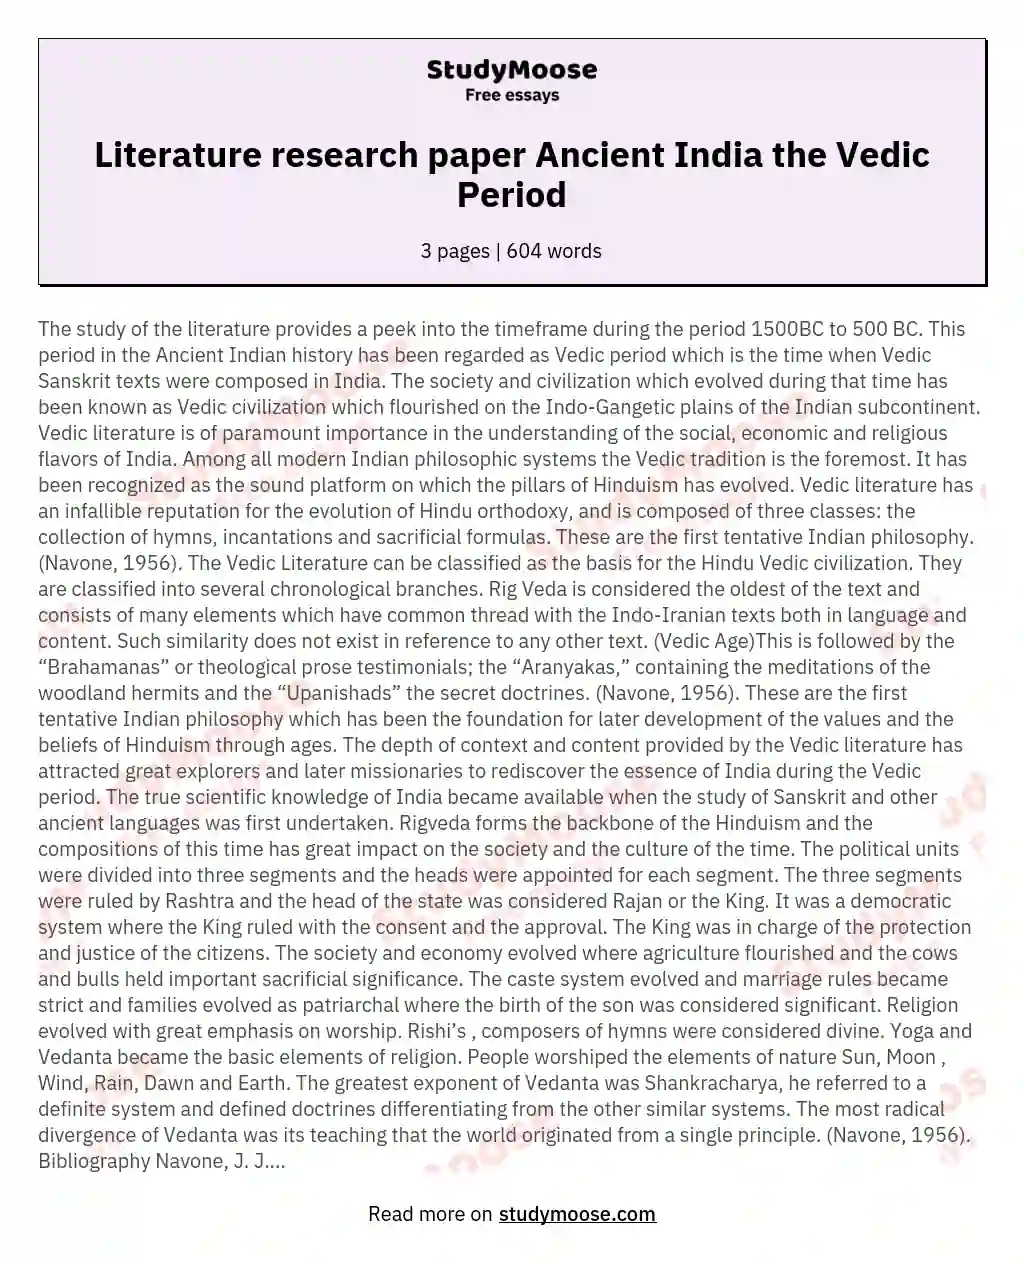 Literature research paper Ancient India the Vedic Period essay